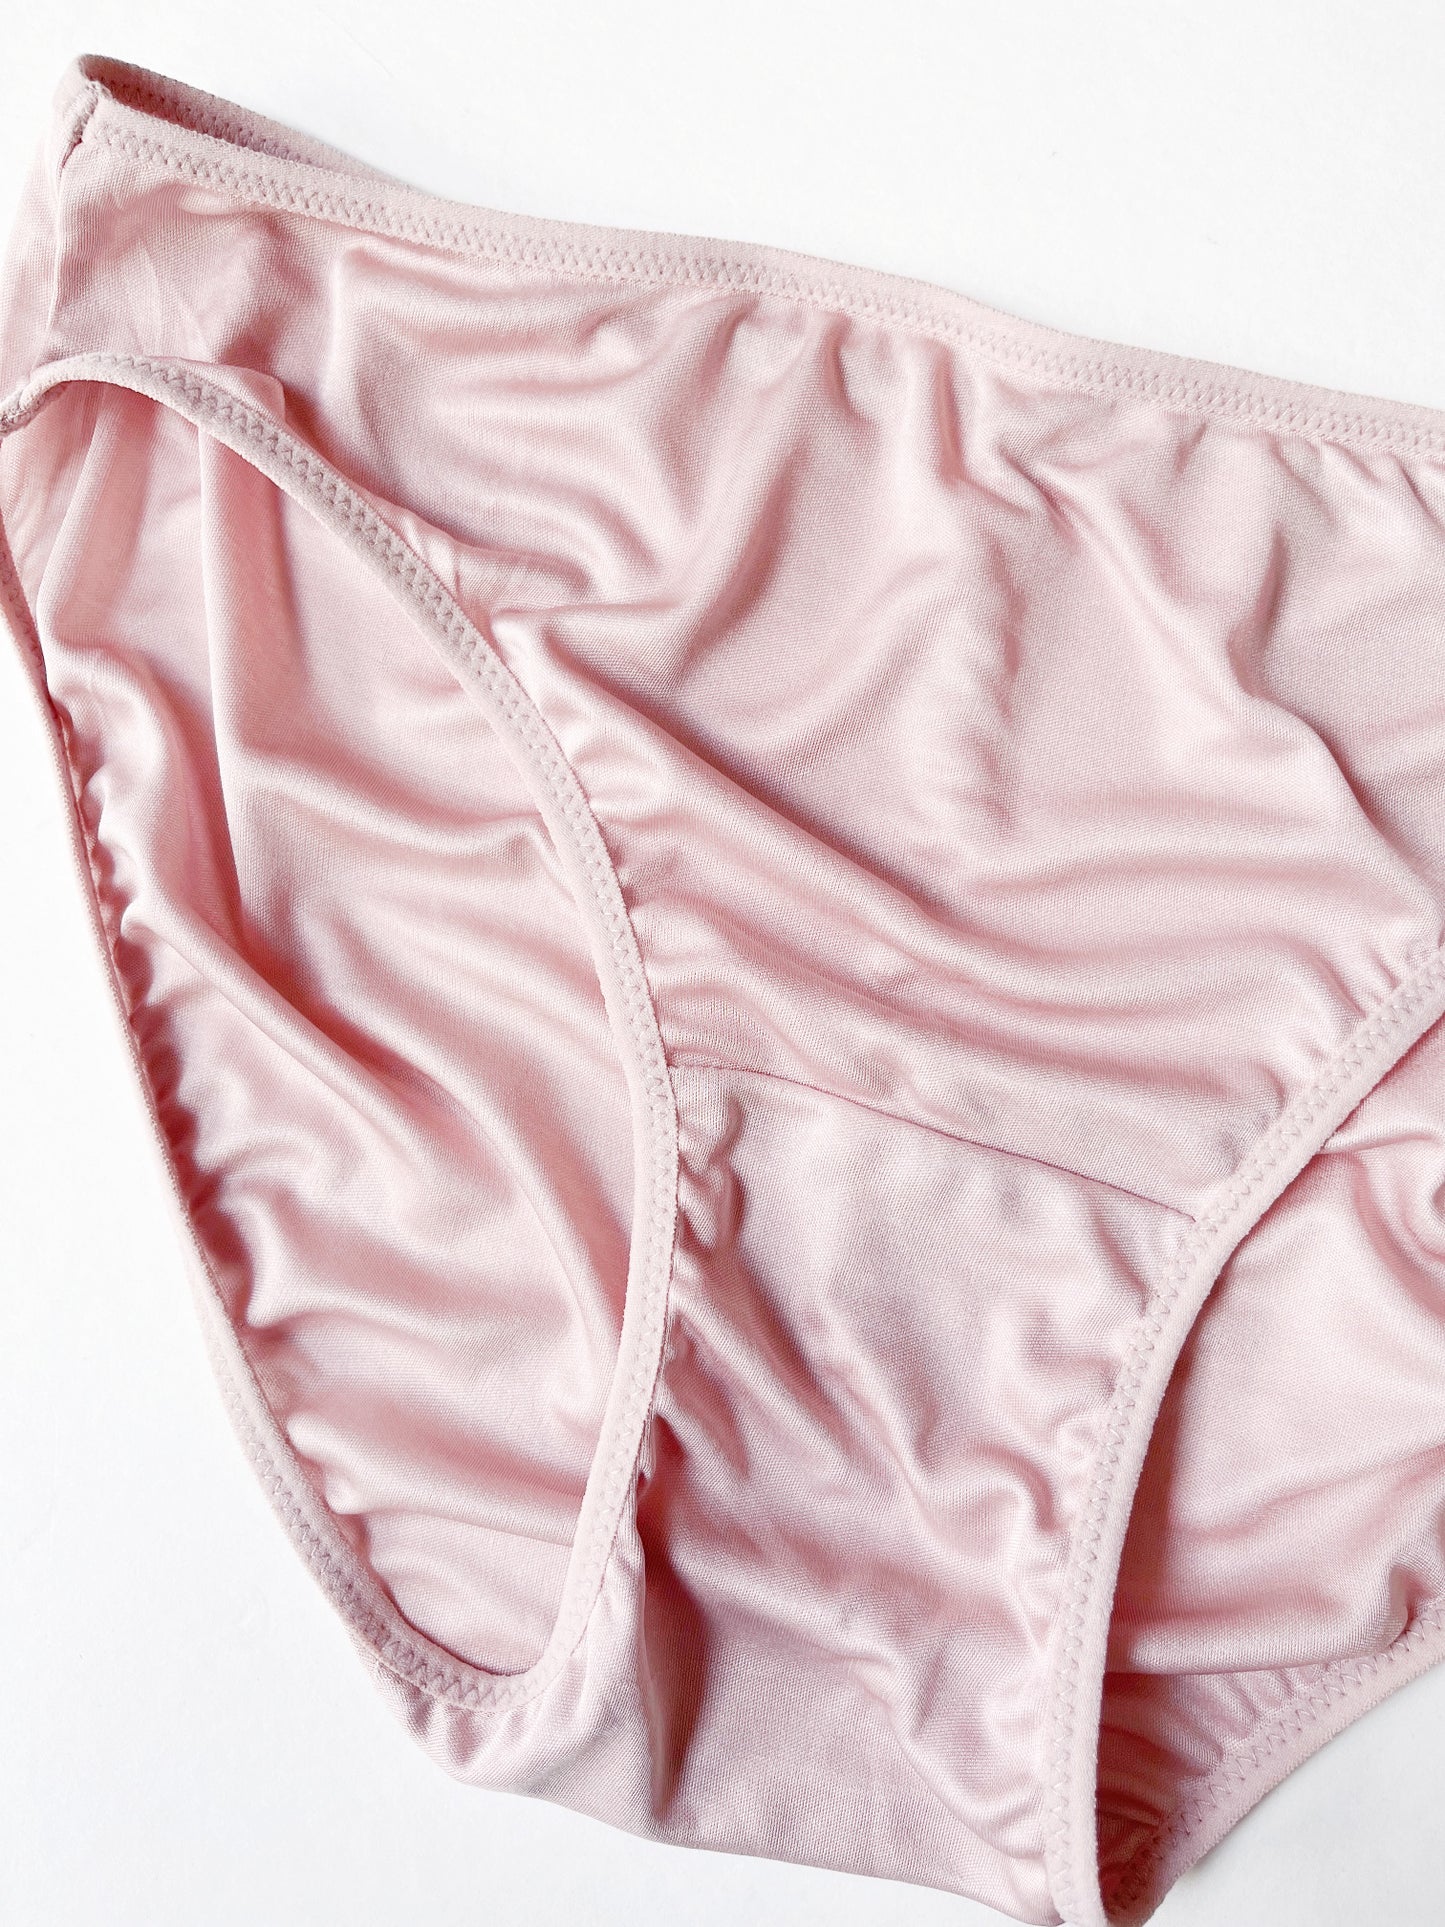 Silksilky Washable Silky Panties for Sale Best Underwear for Women